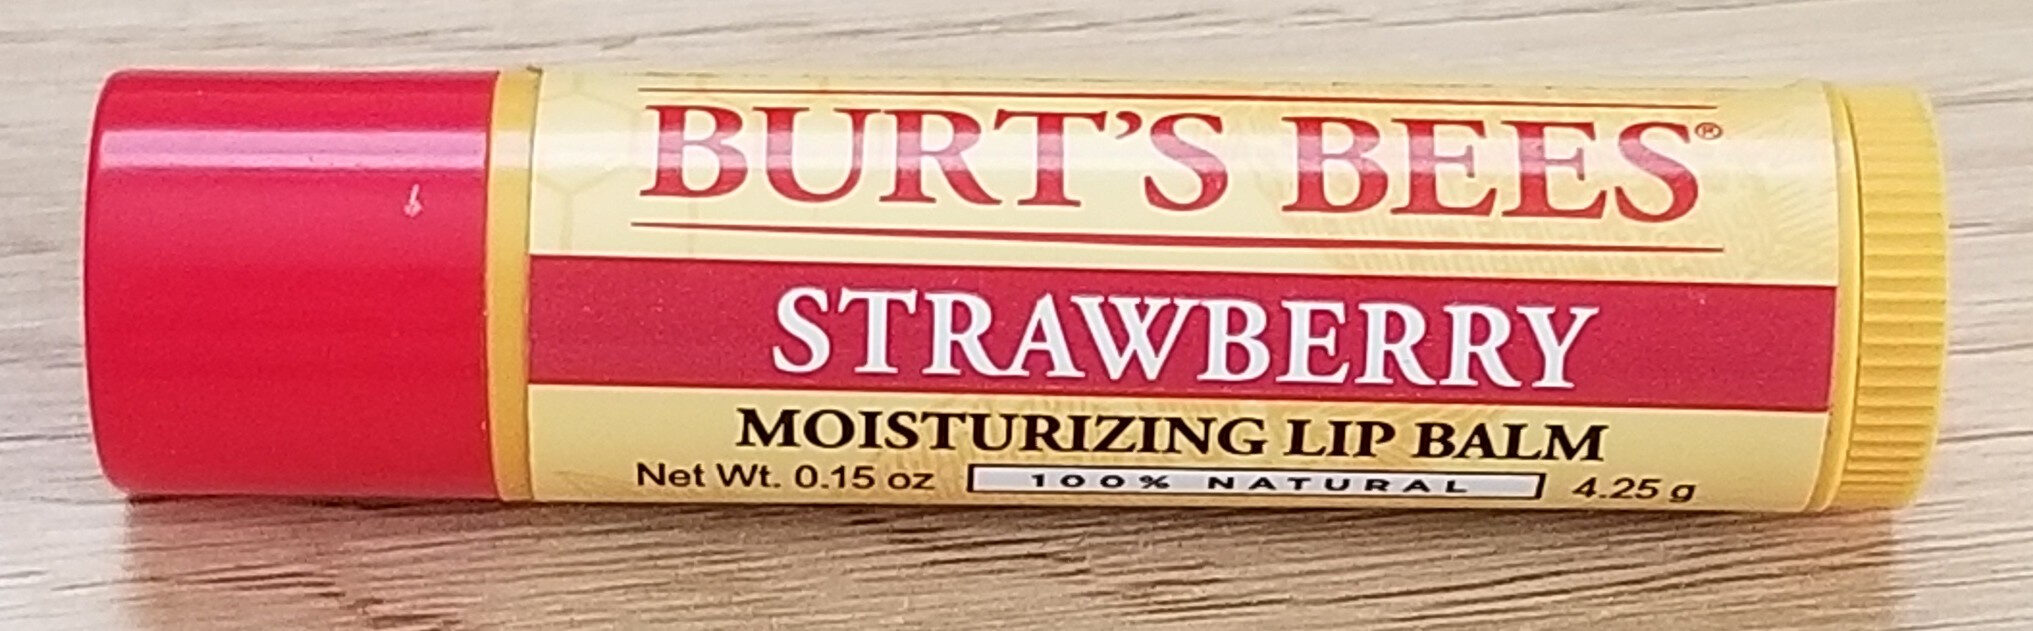 Strawberry Moisturizing Lip Balm - Продукт - en